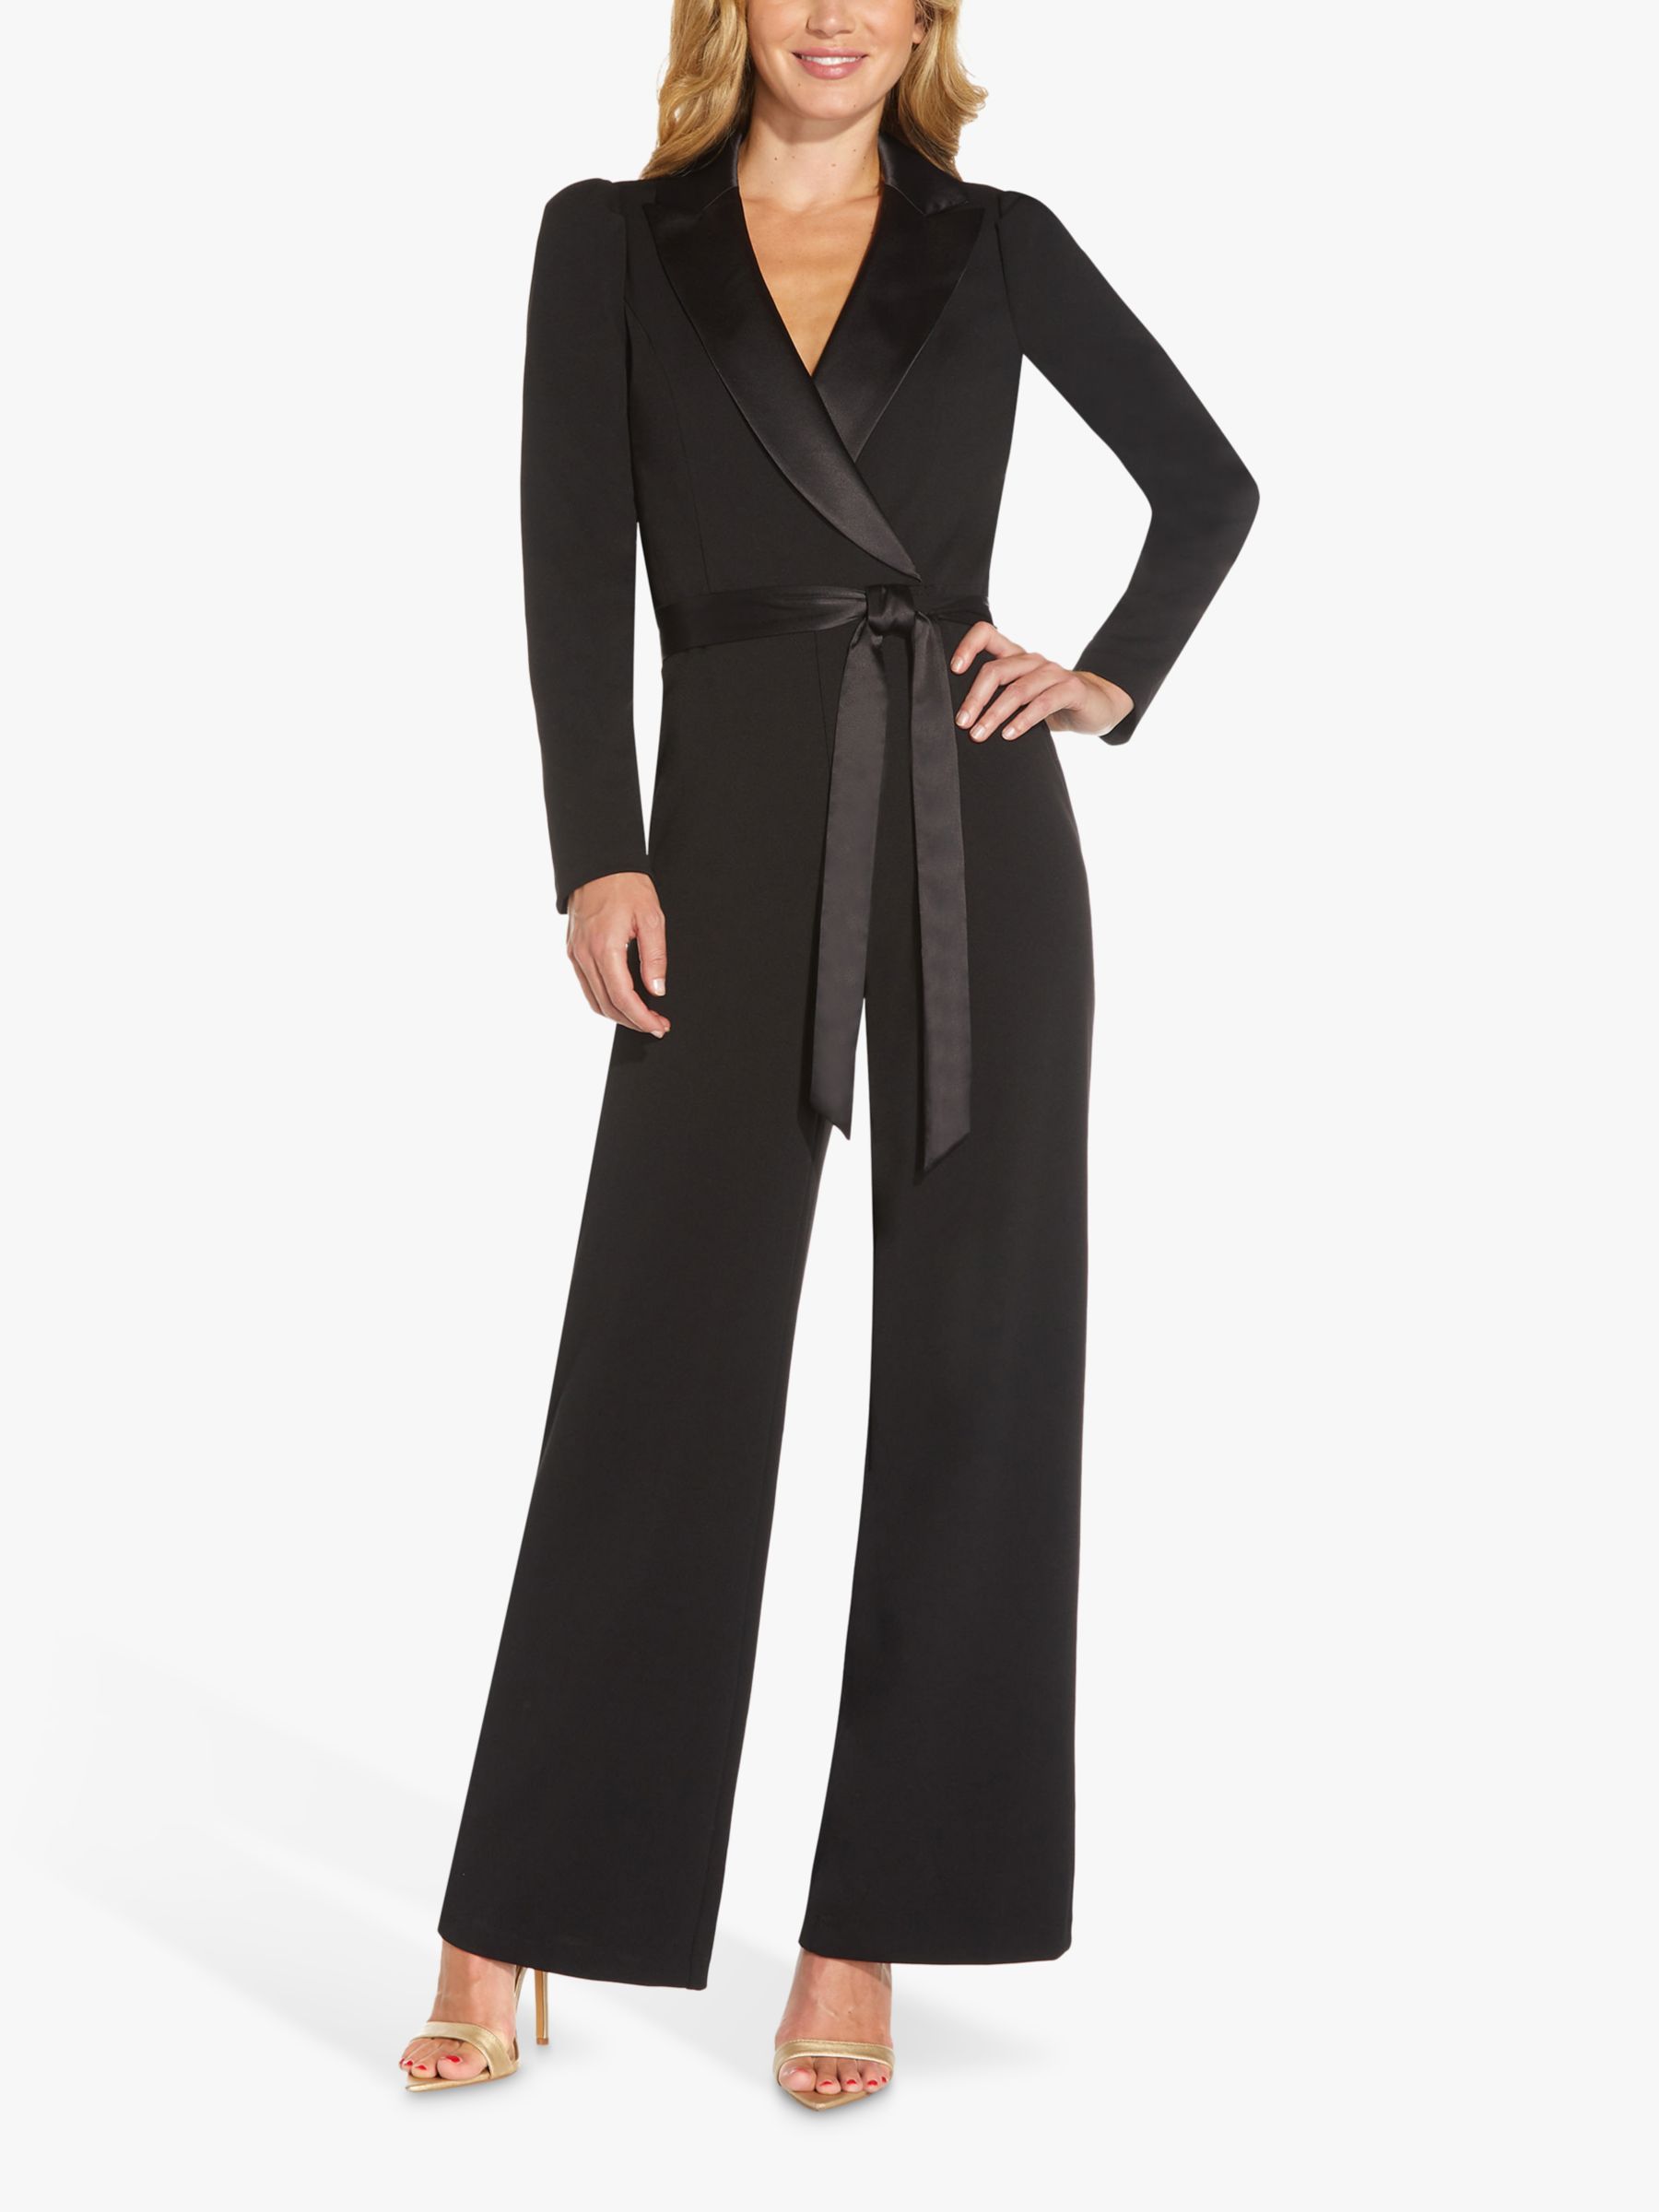 Adrianna Papell Knit Crepe Tuxedo Jumpsuit, Black, 6